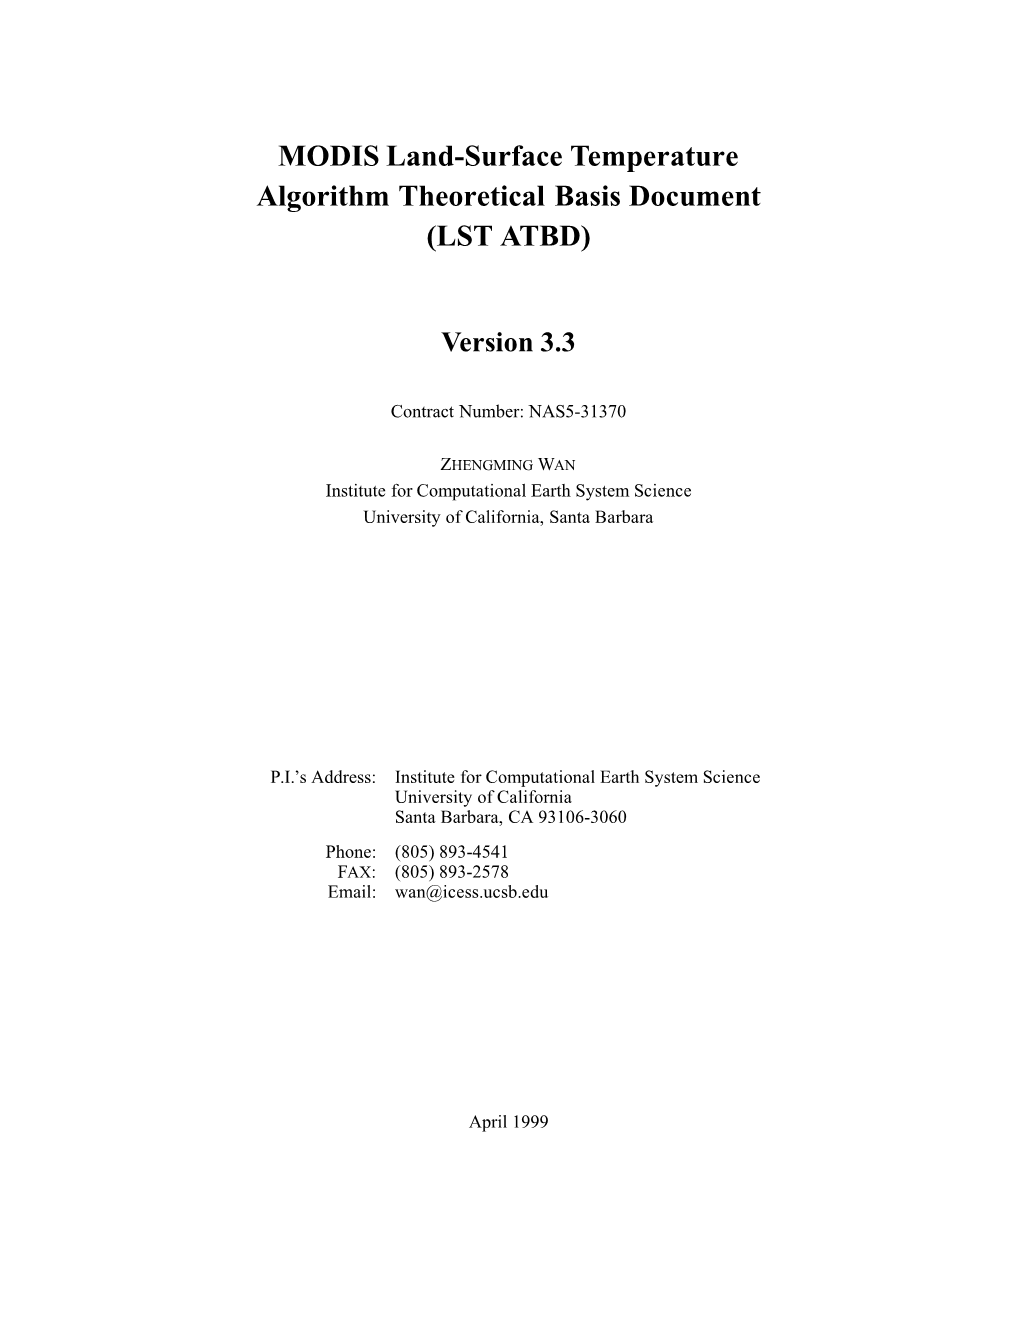 MODIS Land-Surface Temperature Algorithm Theoretical Basis Document (LST ATBD)